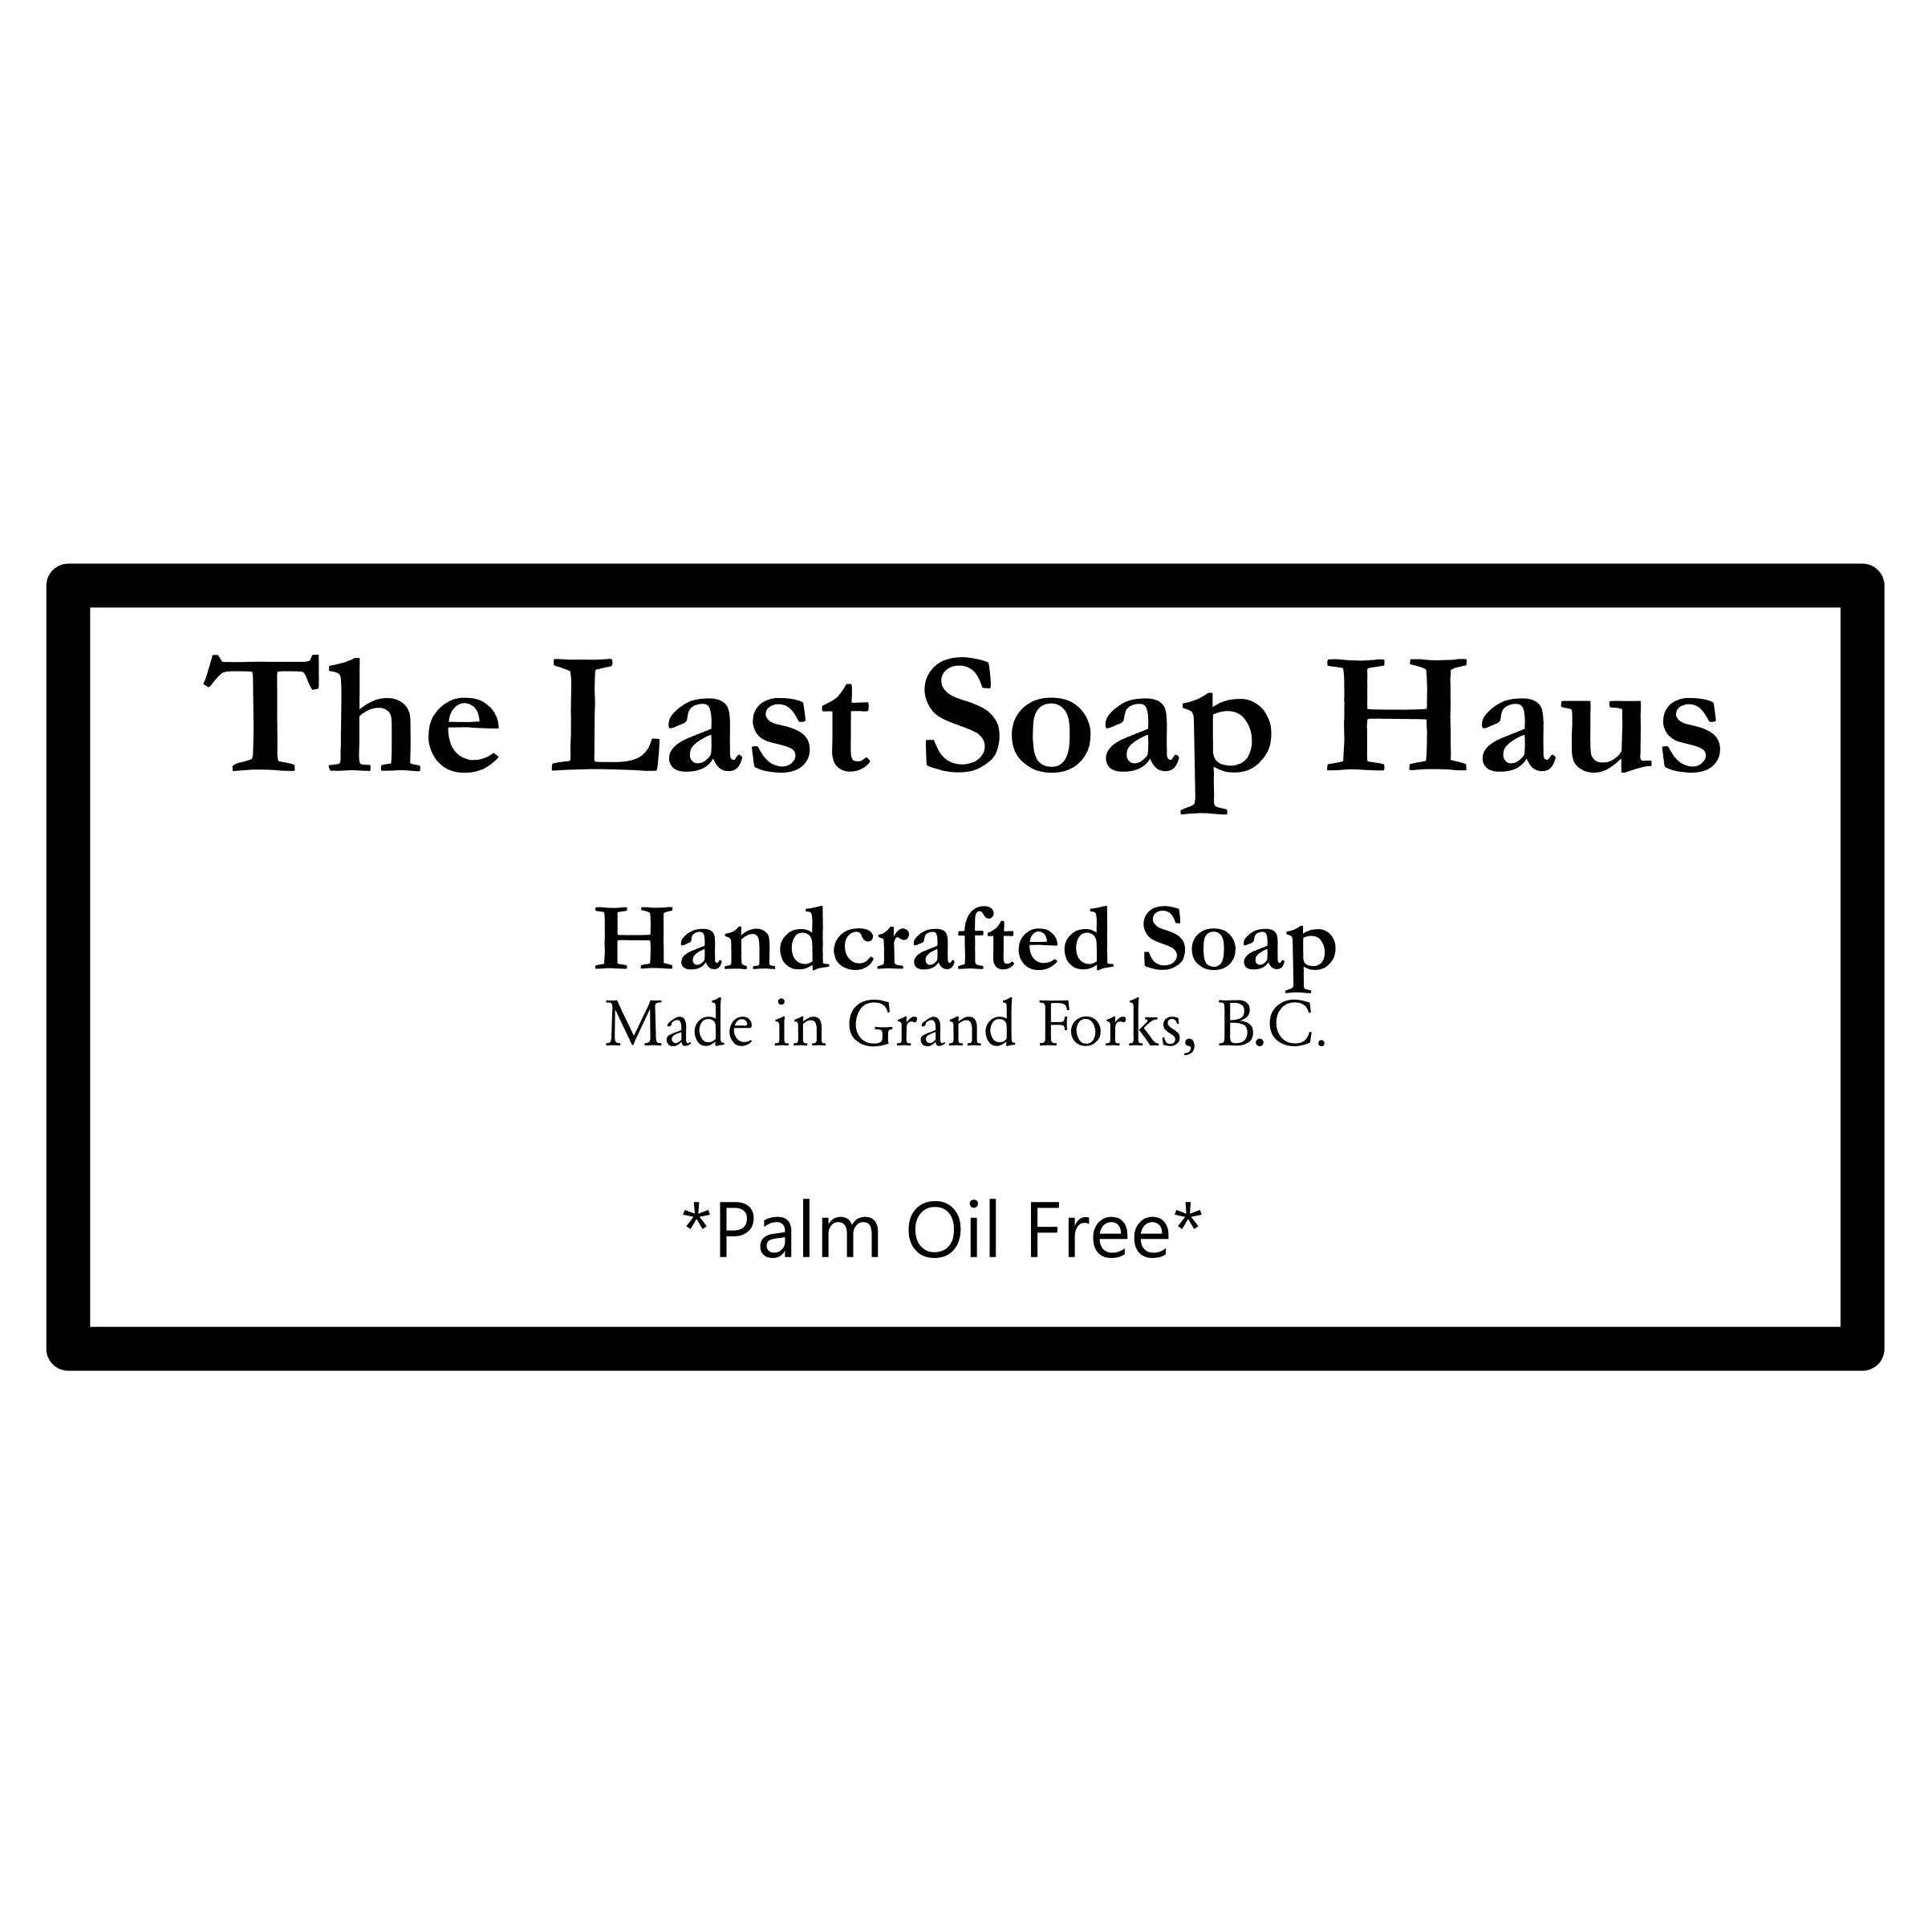 The Last Soap Haus